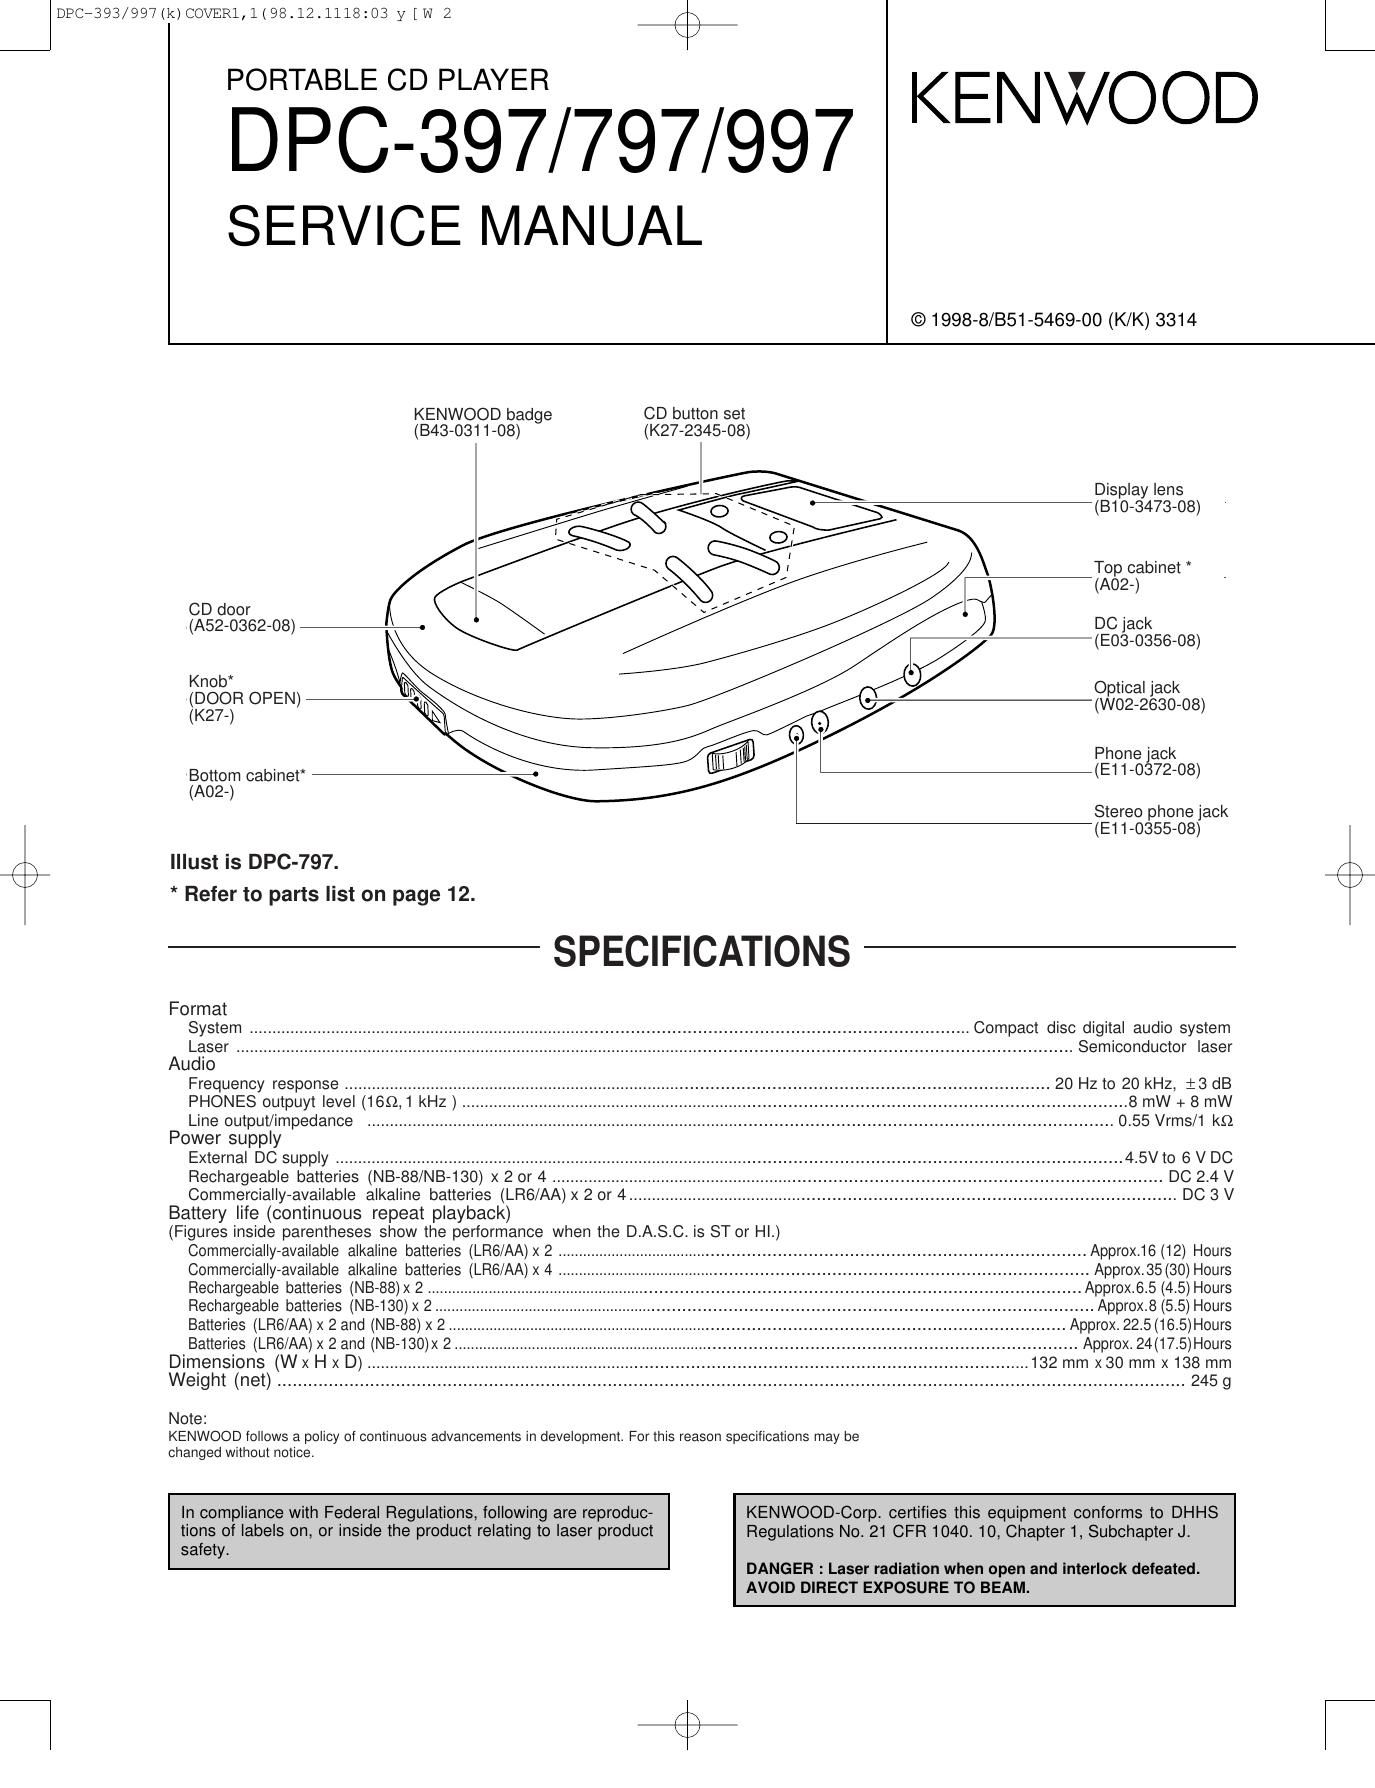 Kenwood DPC 397 Service Manual